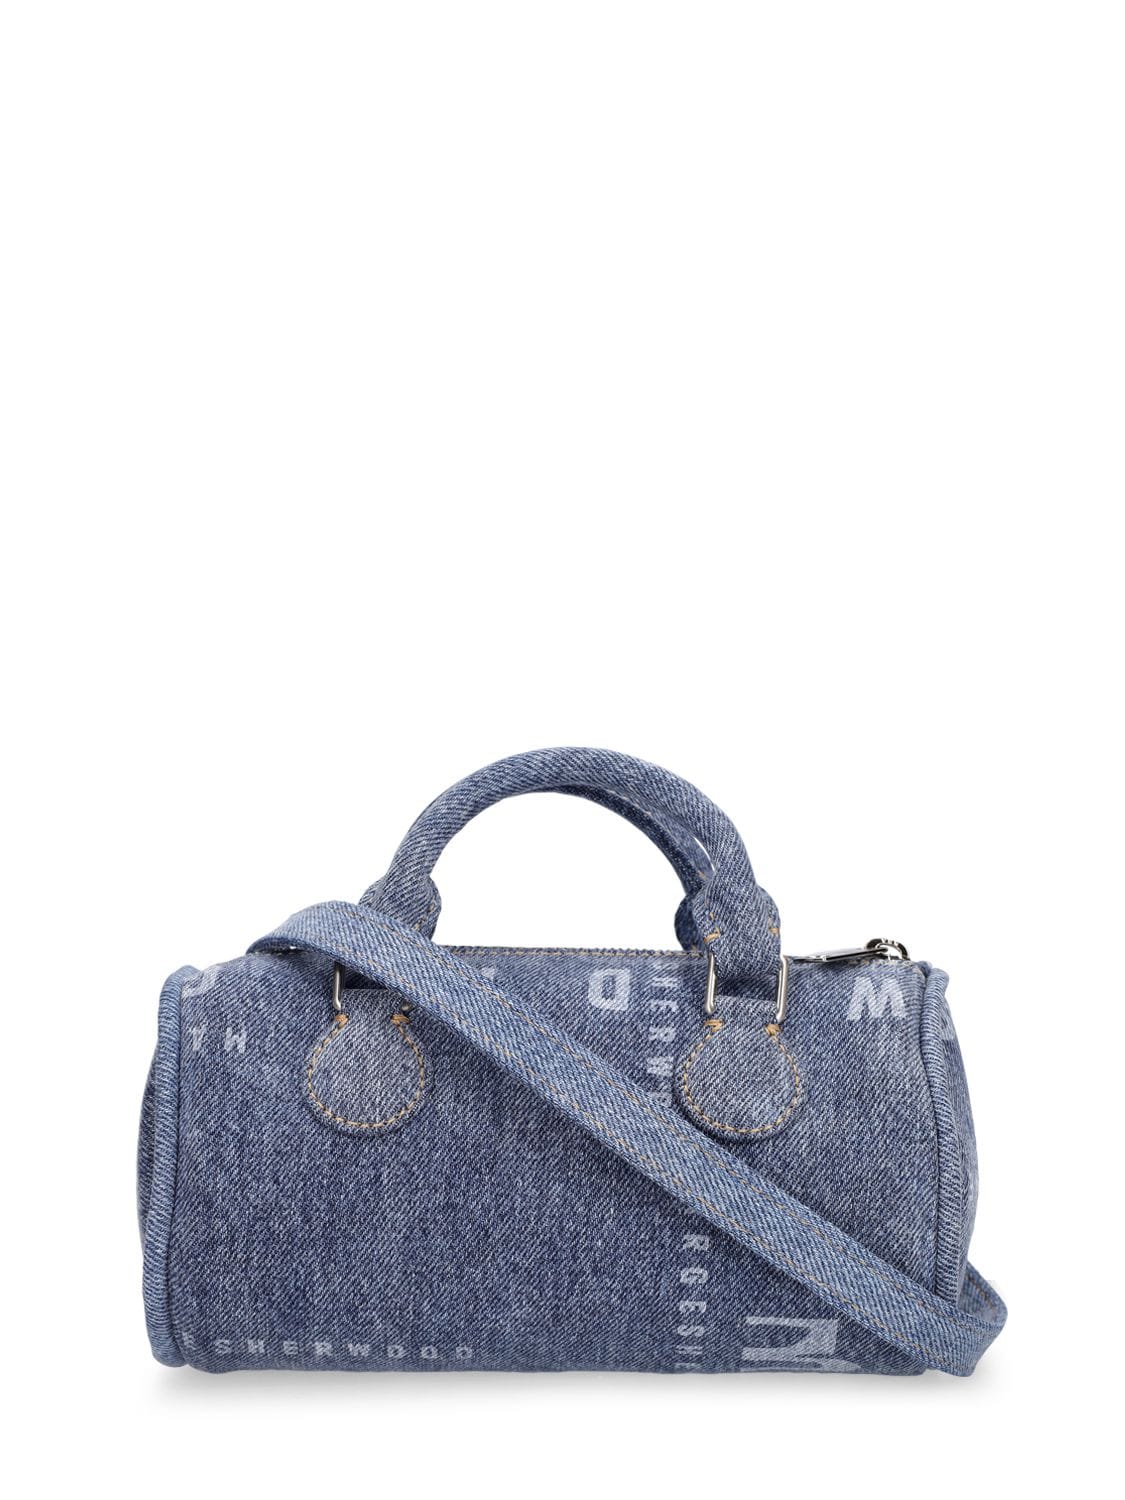 Marge Sherwood Piping Mini Bag in Blue